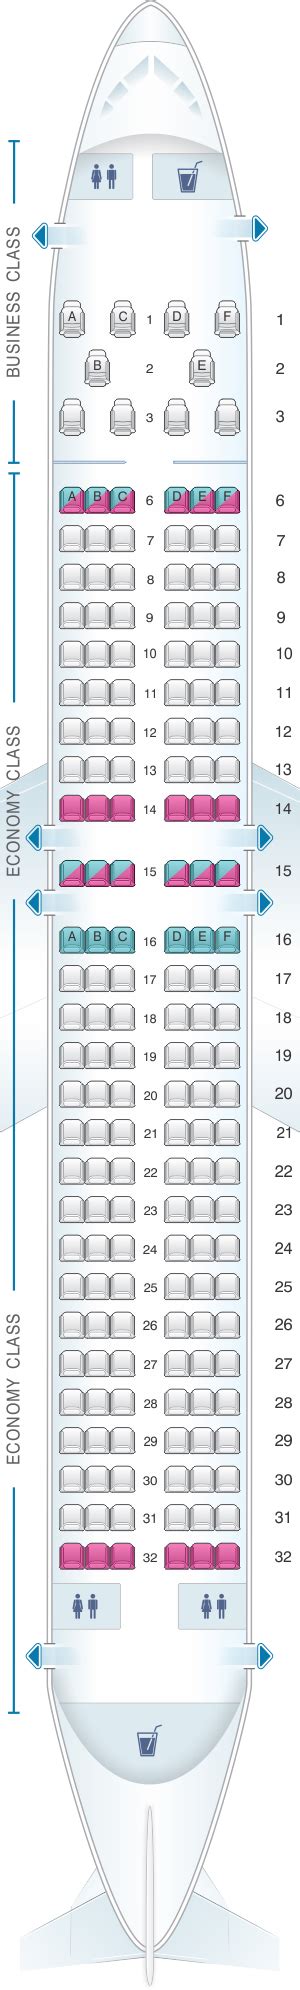 boeing 737 max 8 seat map emirates